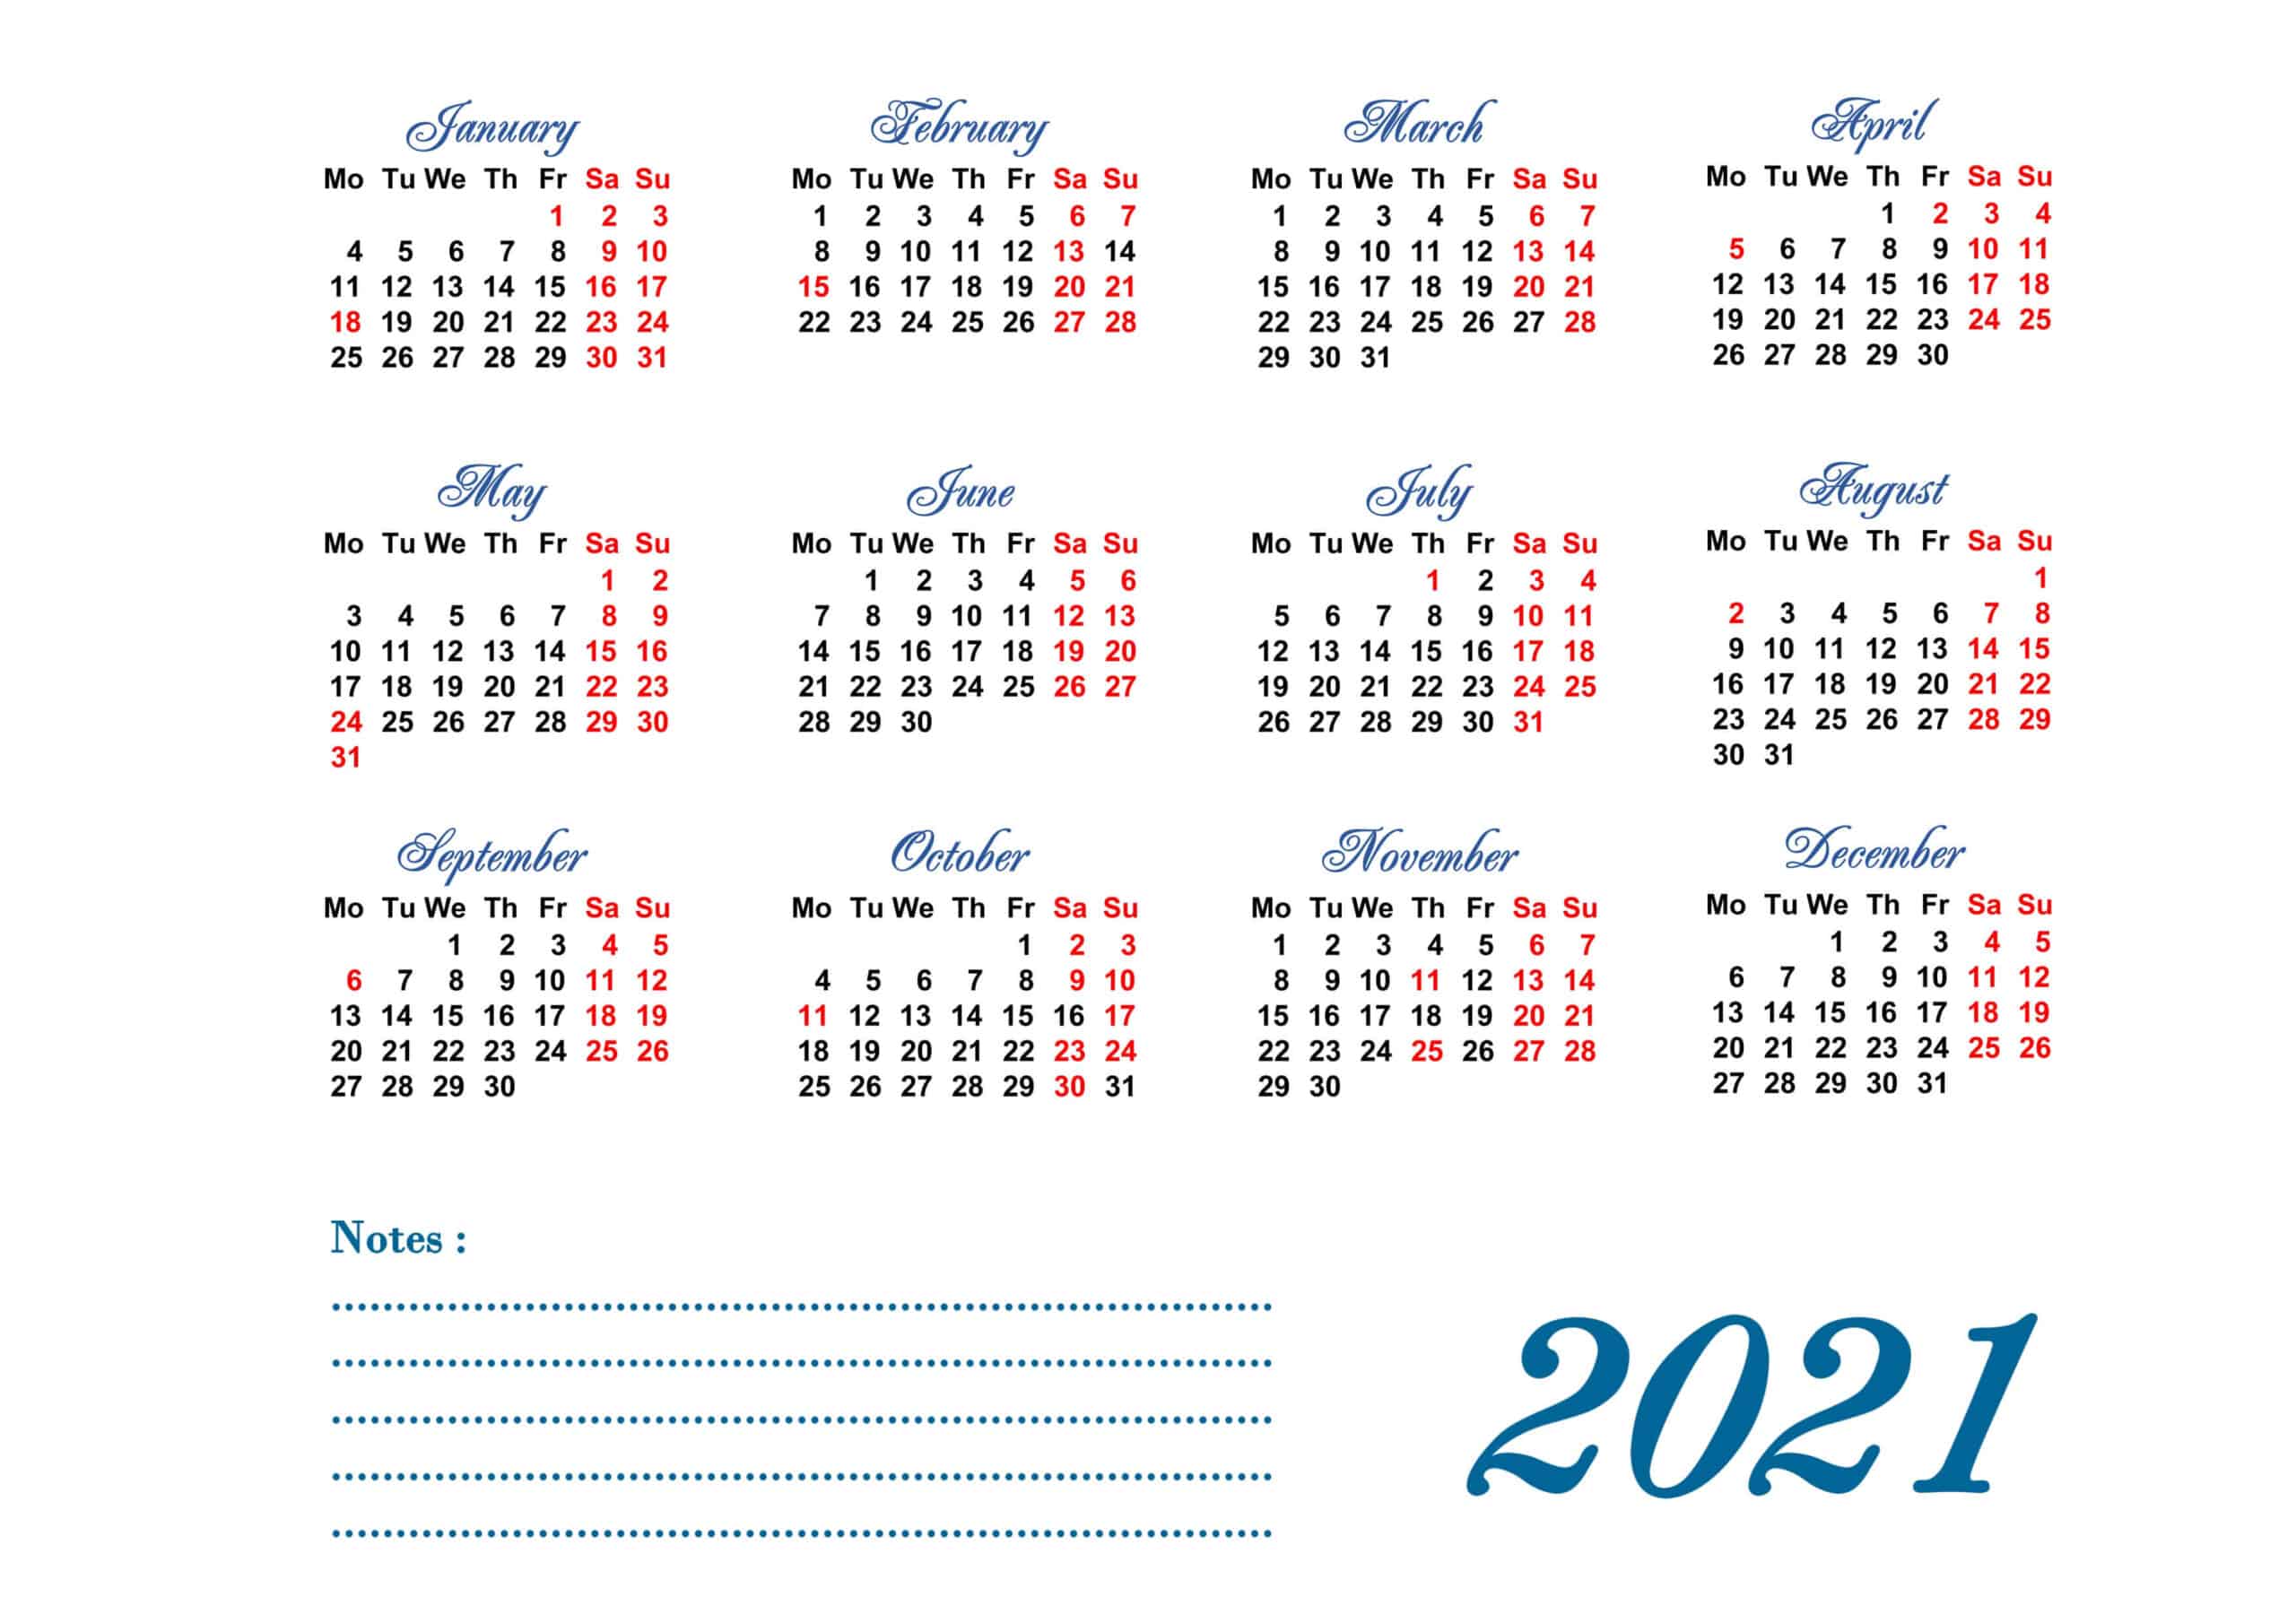 calendar 2021 with notes